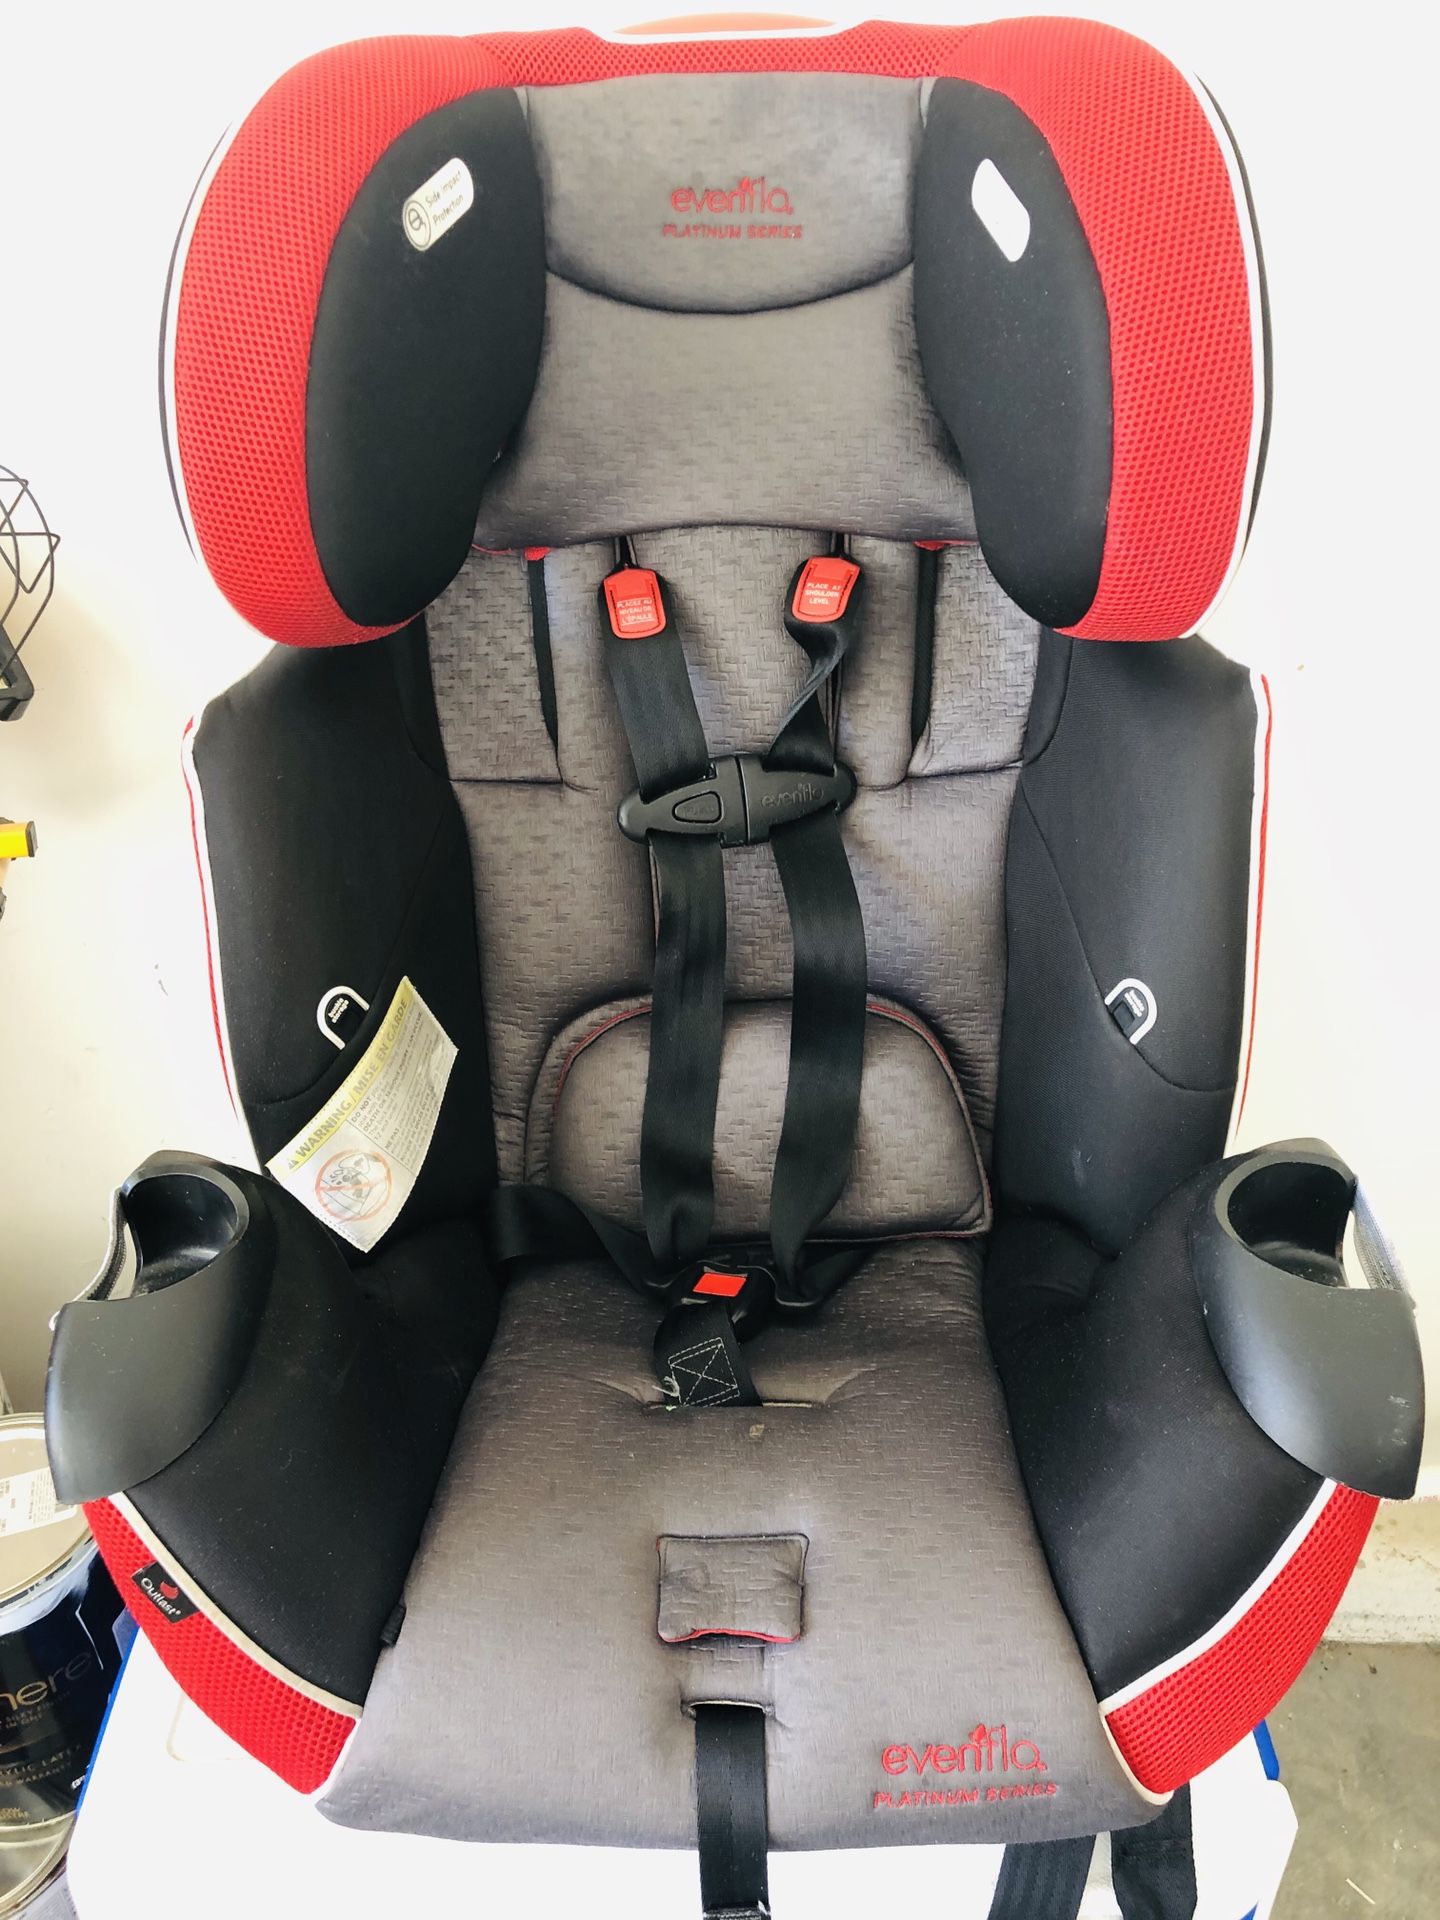 Evenflo red/black car seat